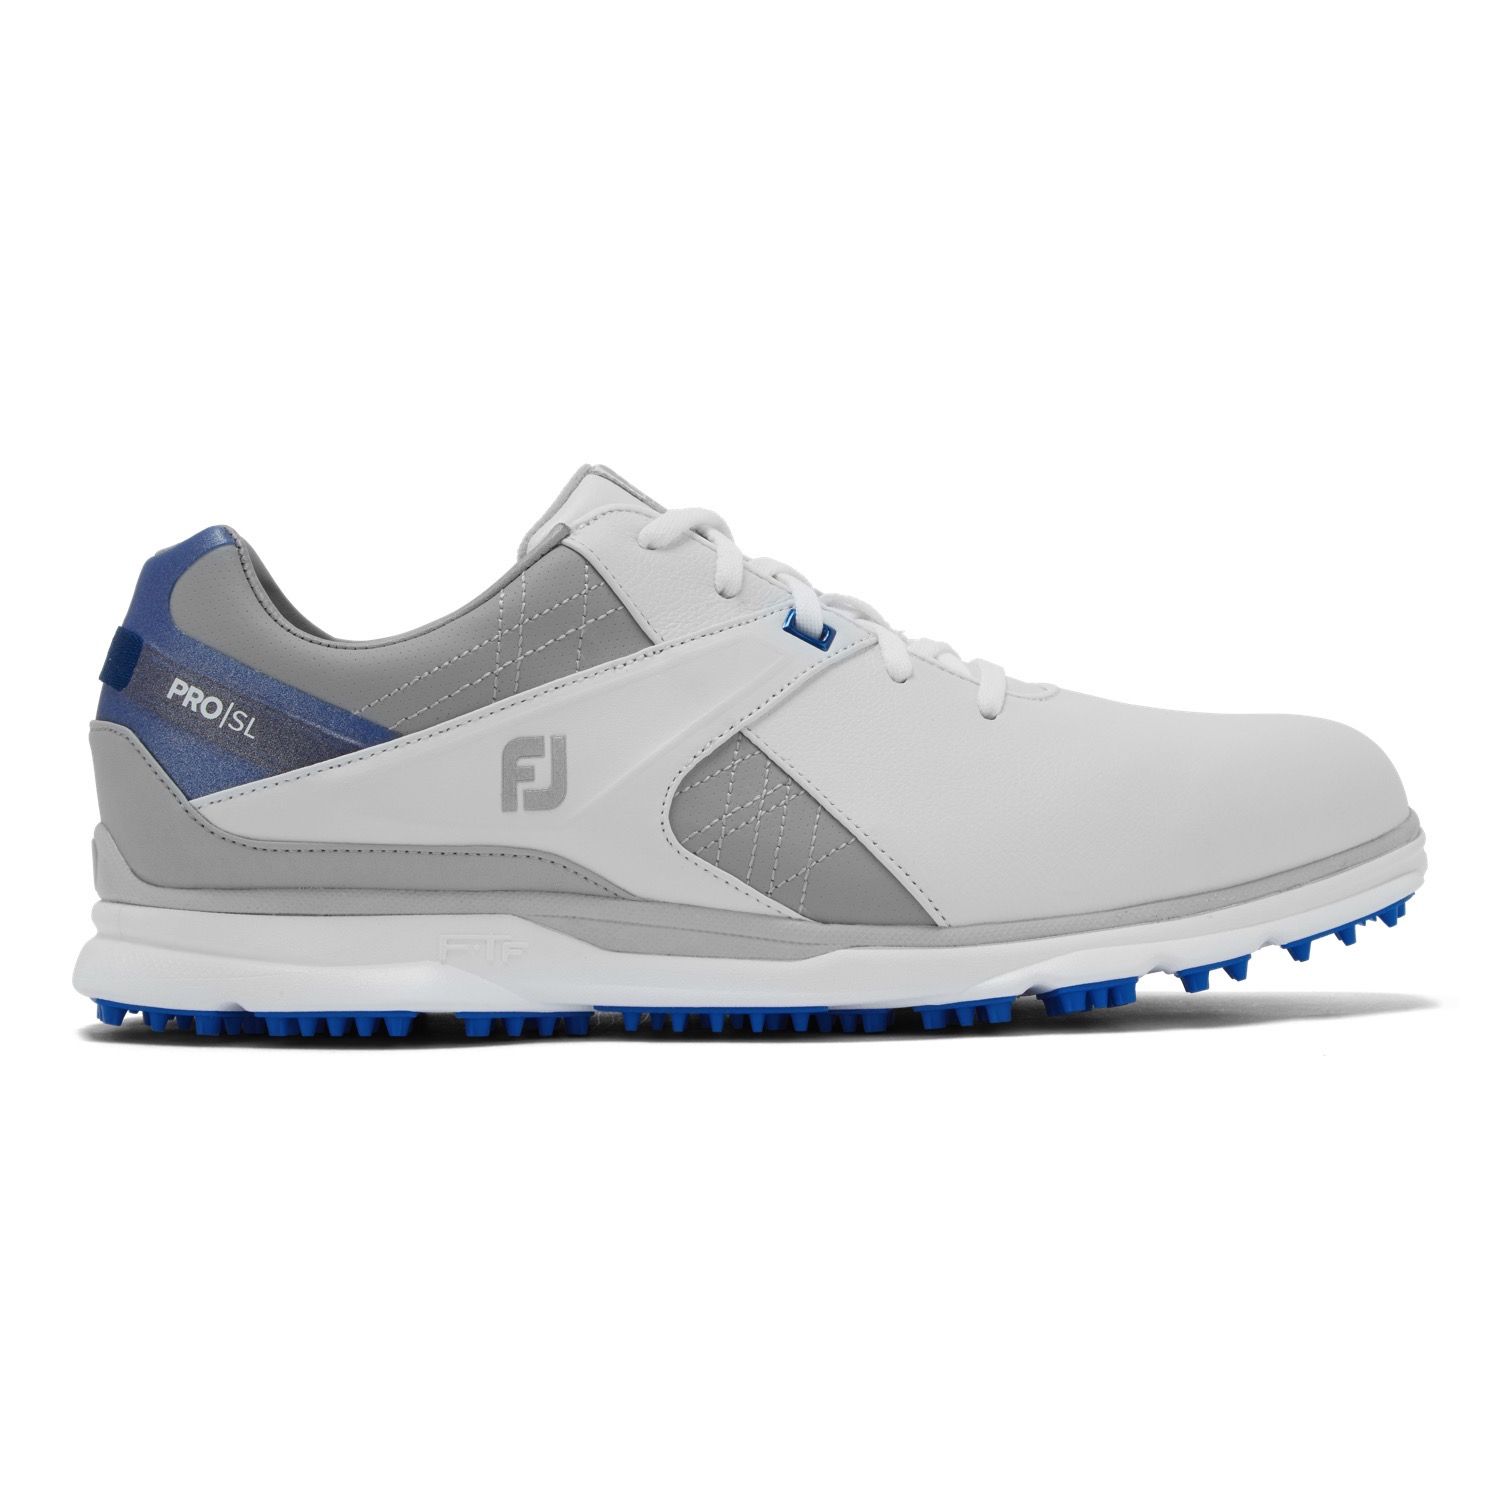 FootJoy Pro SL Golf Shoes #53811 White/Grey/Royal Blue | Scottsdale Golf